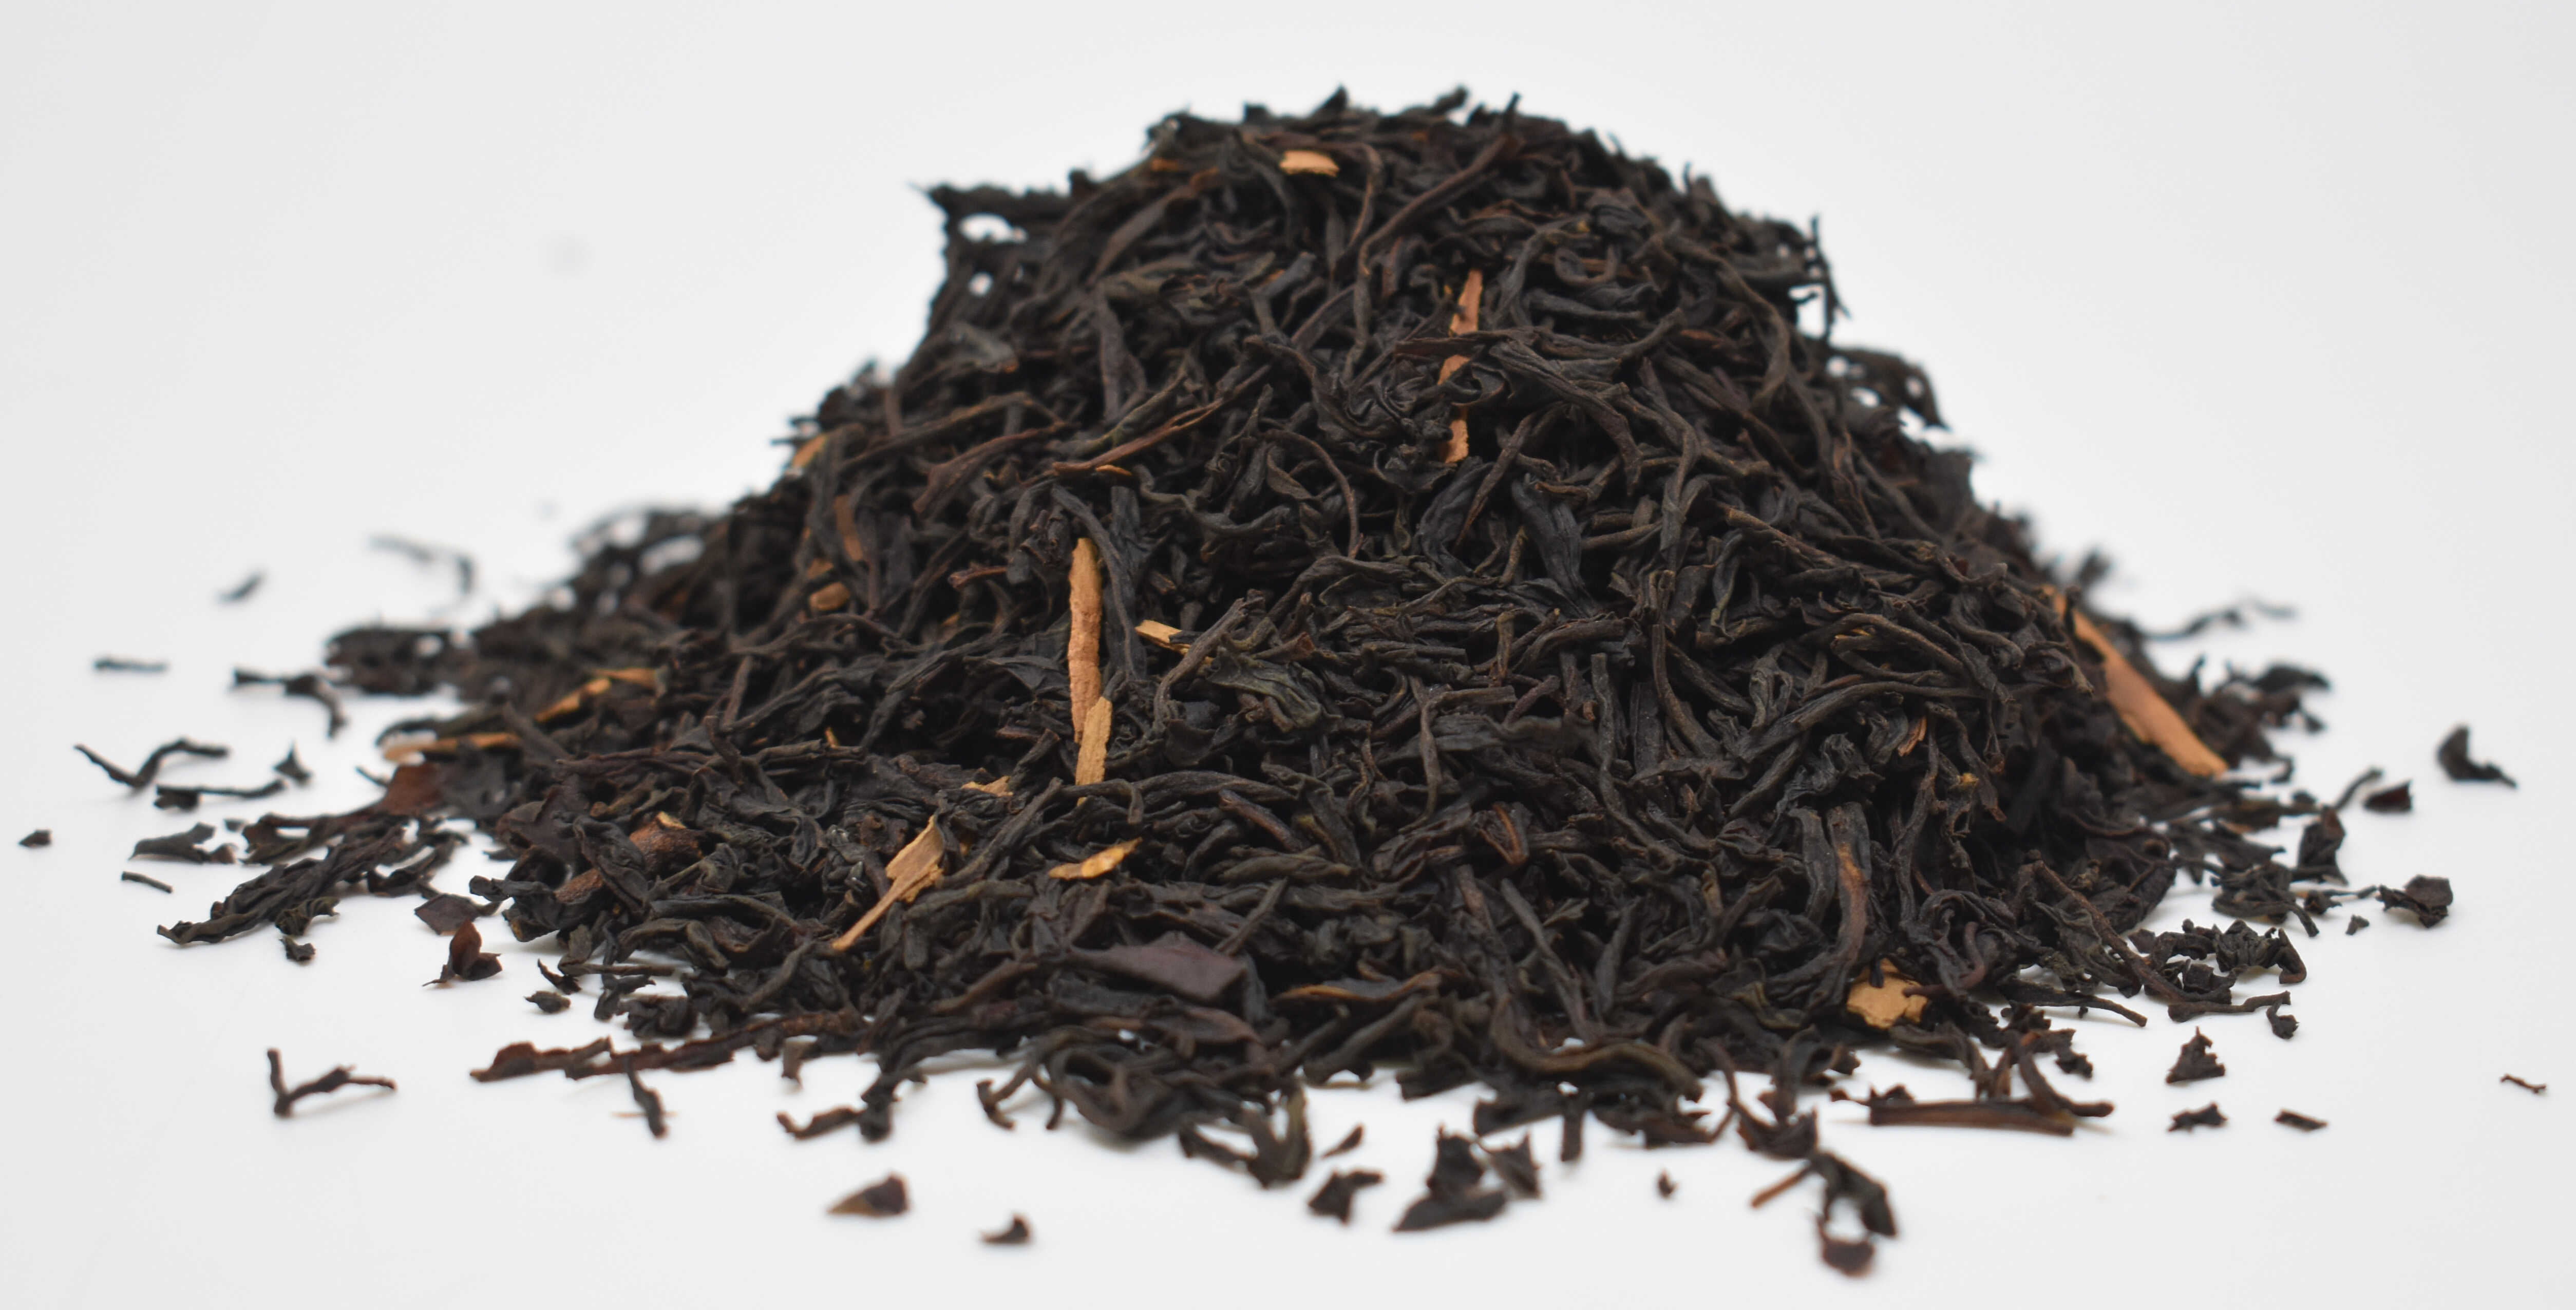 Mulled Spice Black Tea - Side Photo